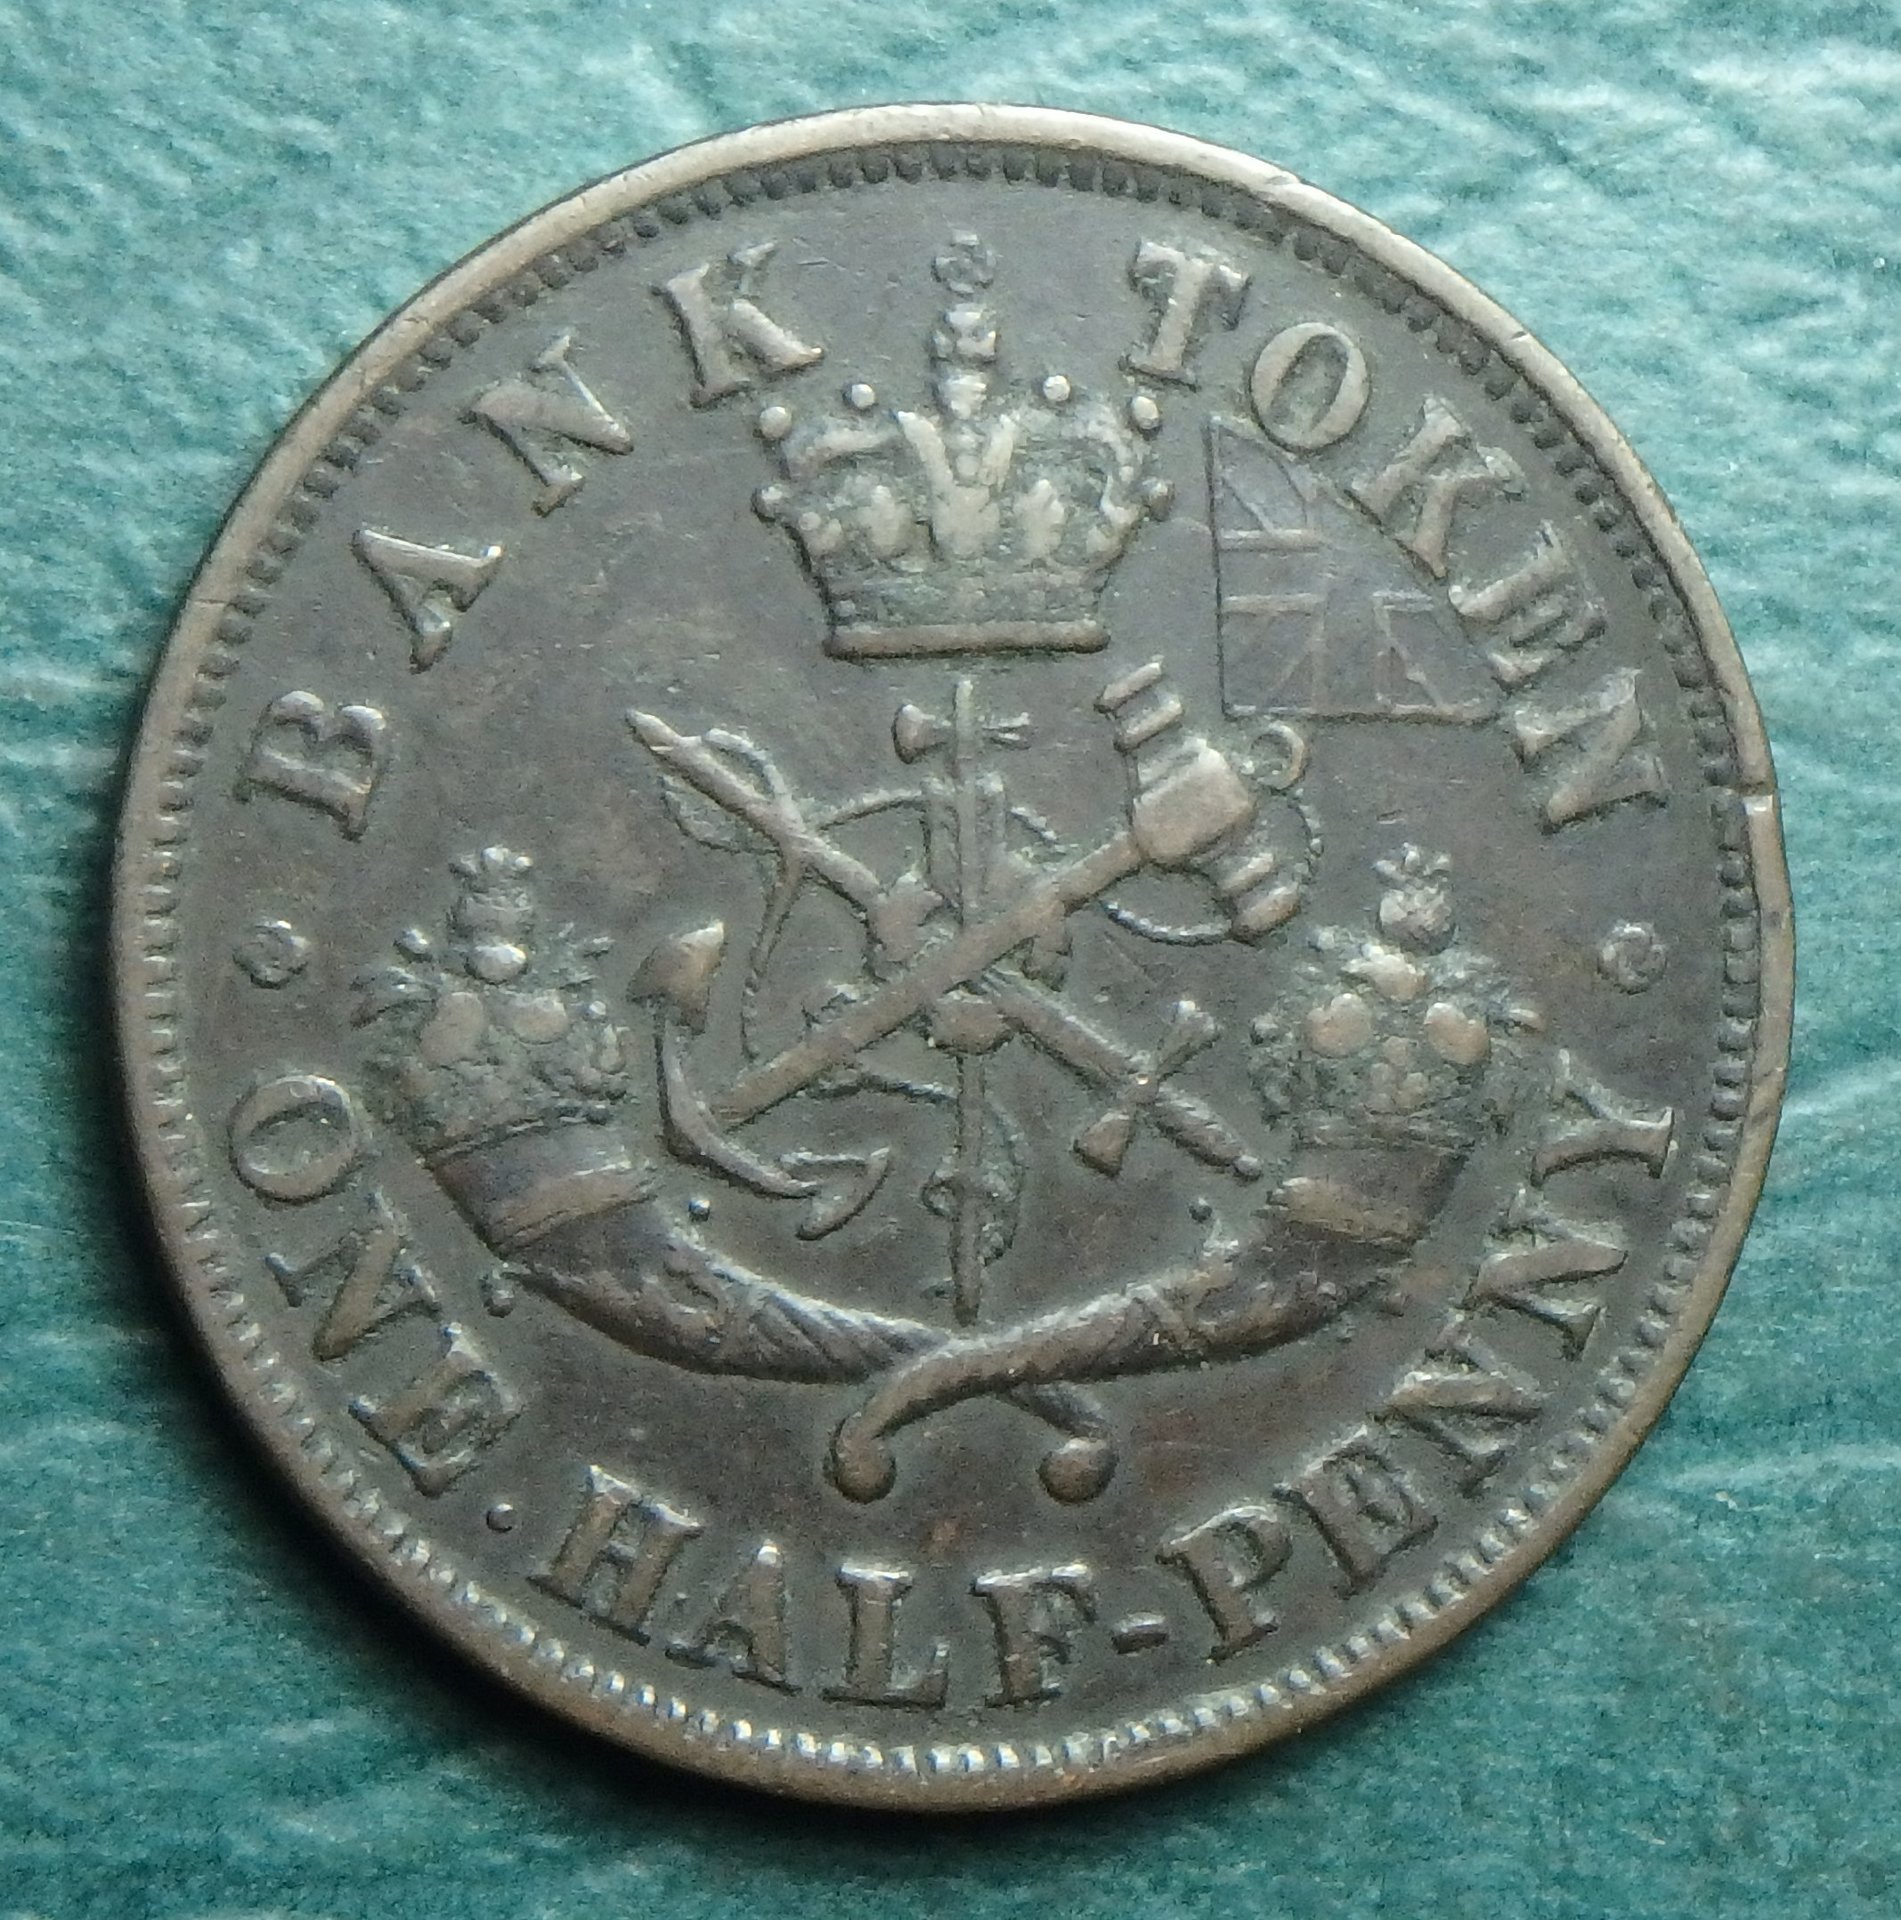 1854 Canada 1-2 p token obv.JPG